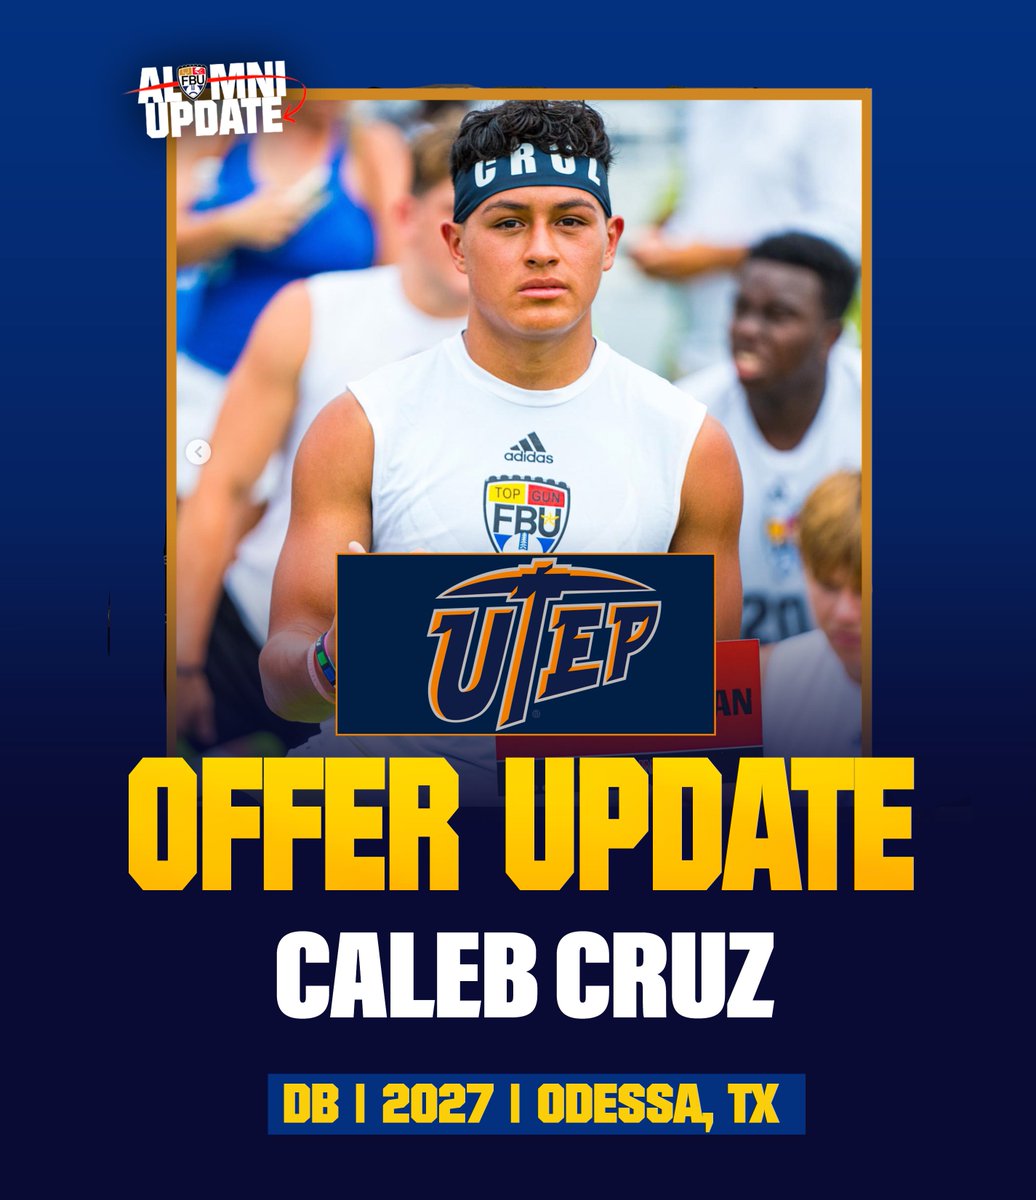 OFFER UPDATE ✅ #FBUPathAlum Caleb Cruz secures first D1 offer from UTEP 🔥 Congratulations 👏 You Next? #FBU #GetBetterHere footballuniversity.org @calebcruz2027